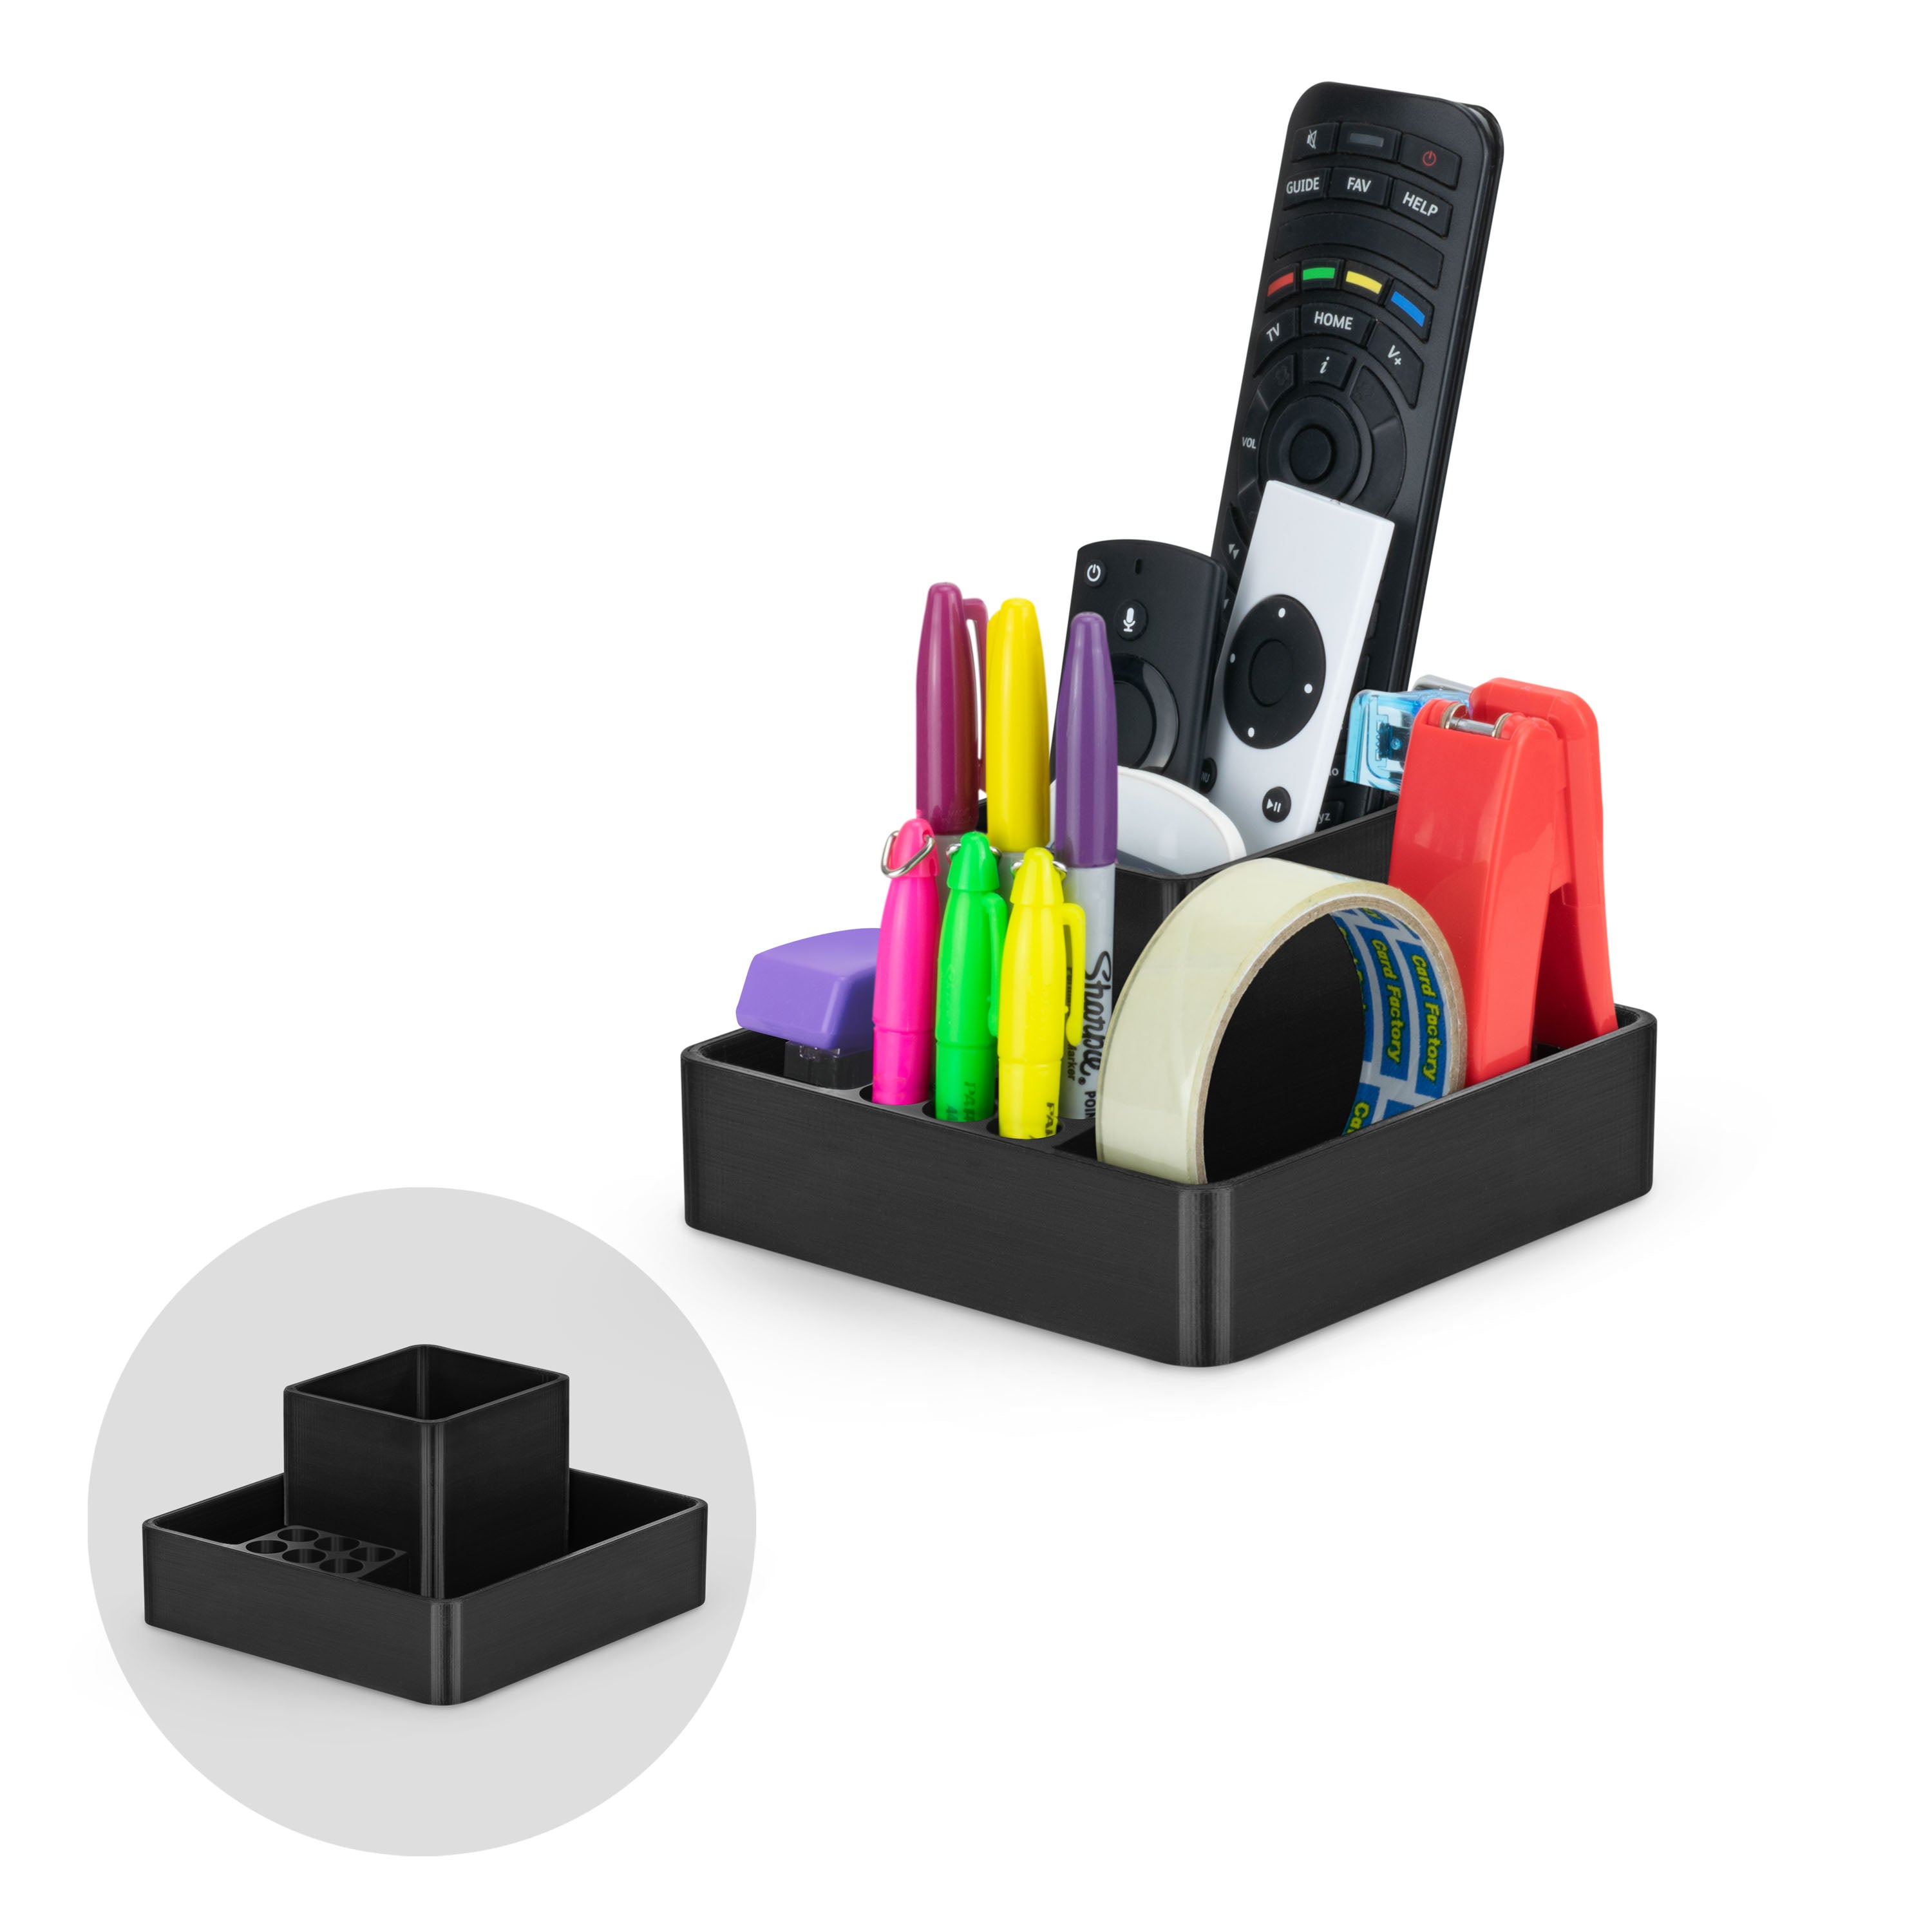 Brainwavz Pen Holder & Desktop Stationary Organizer, TV Remote Control & Office Supplies, for Pens, Pencils, Scissors, Staplers Other Small Home